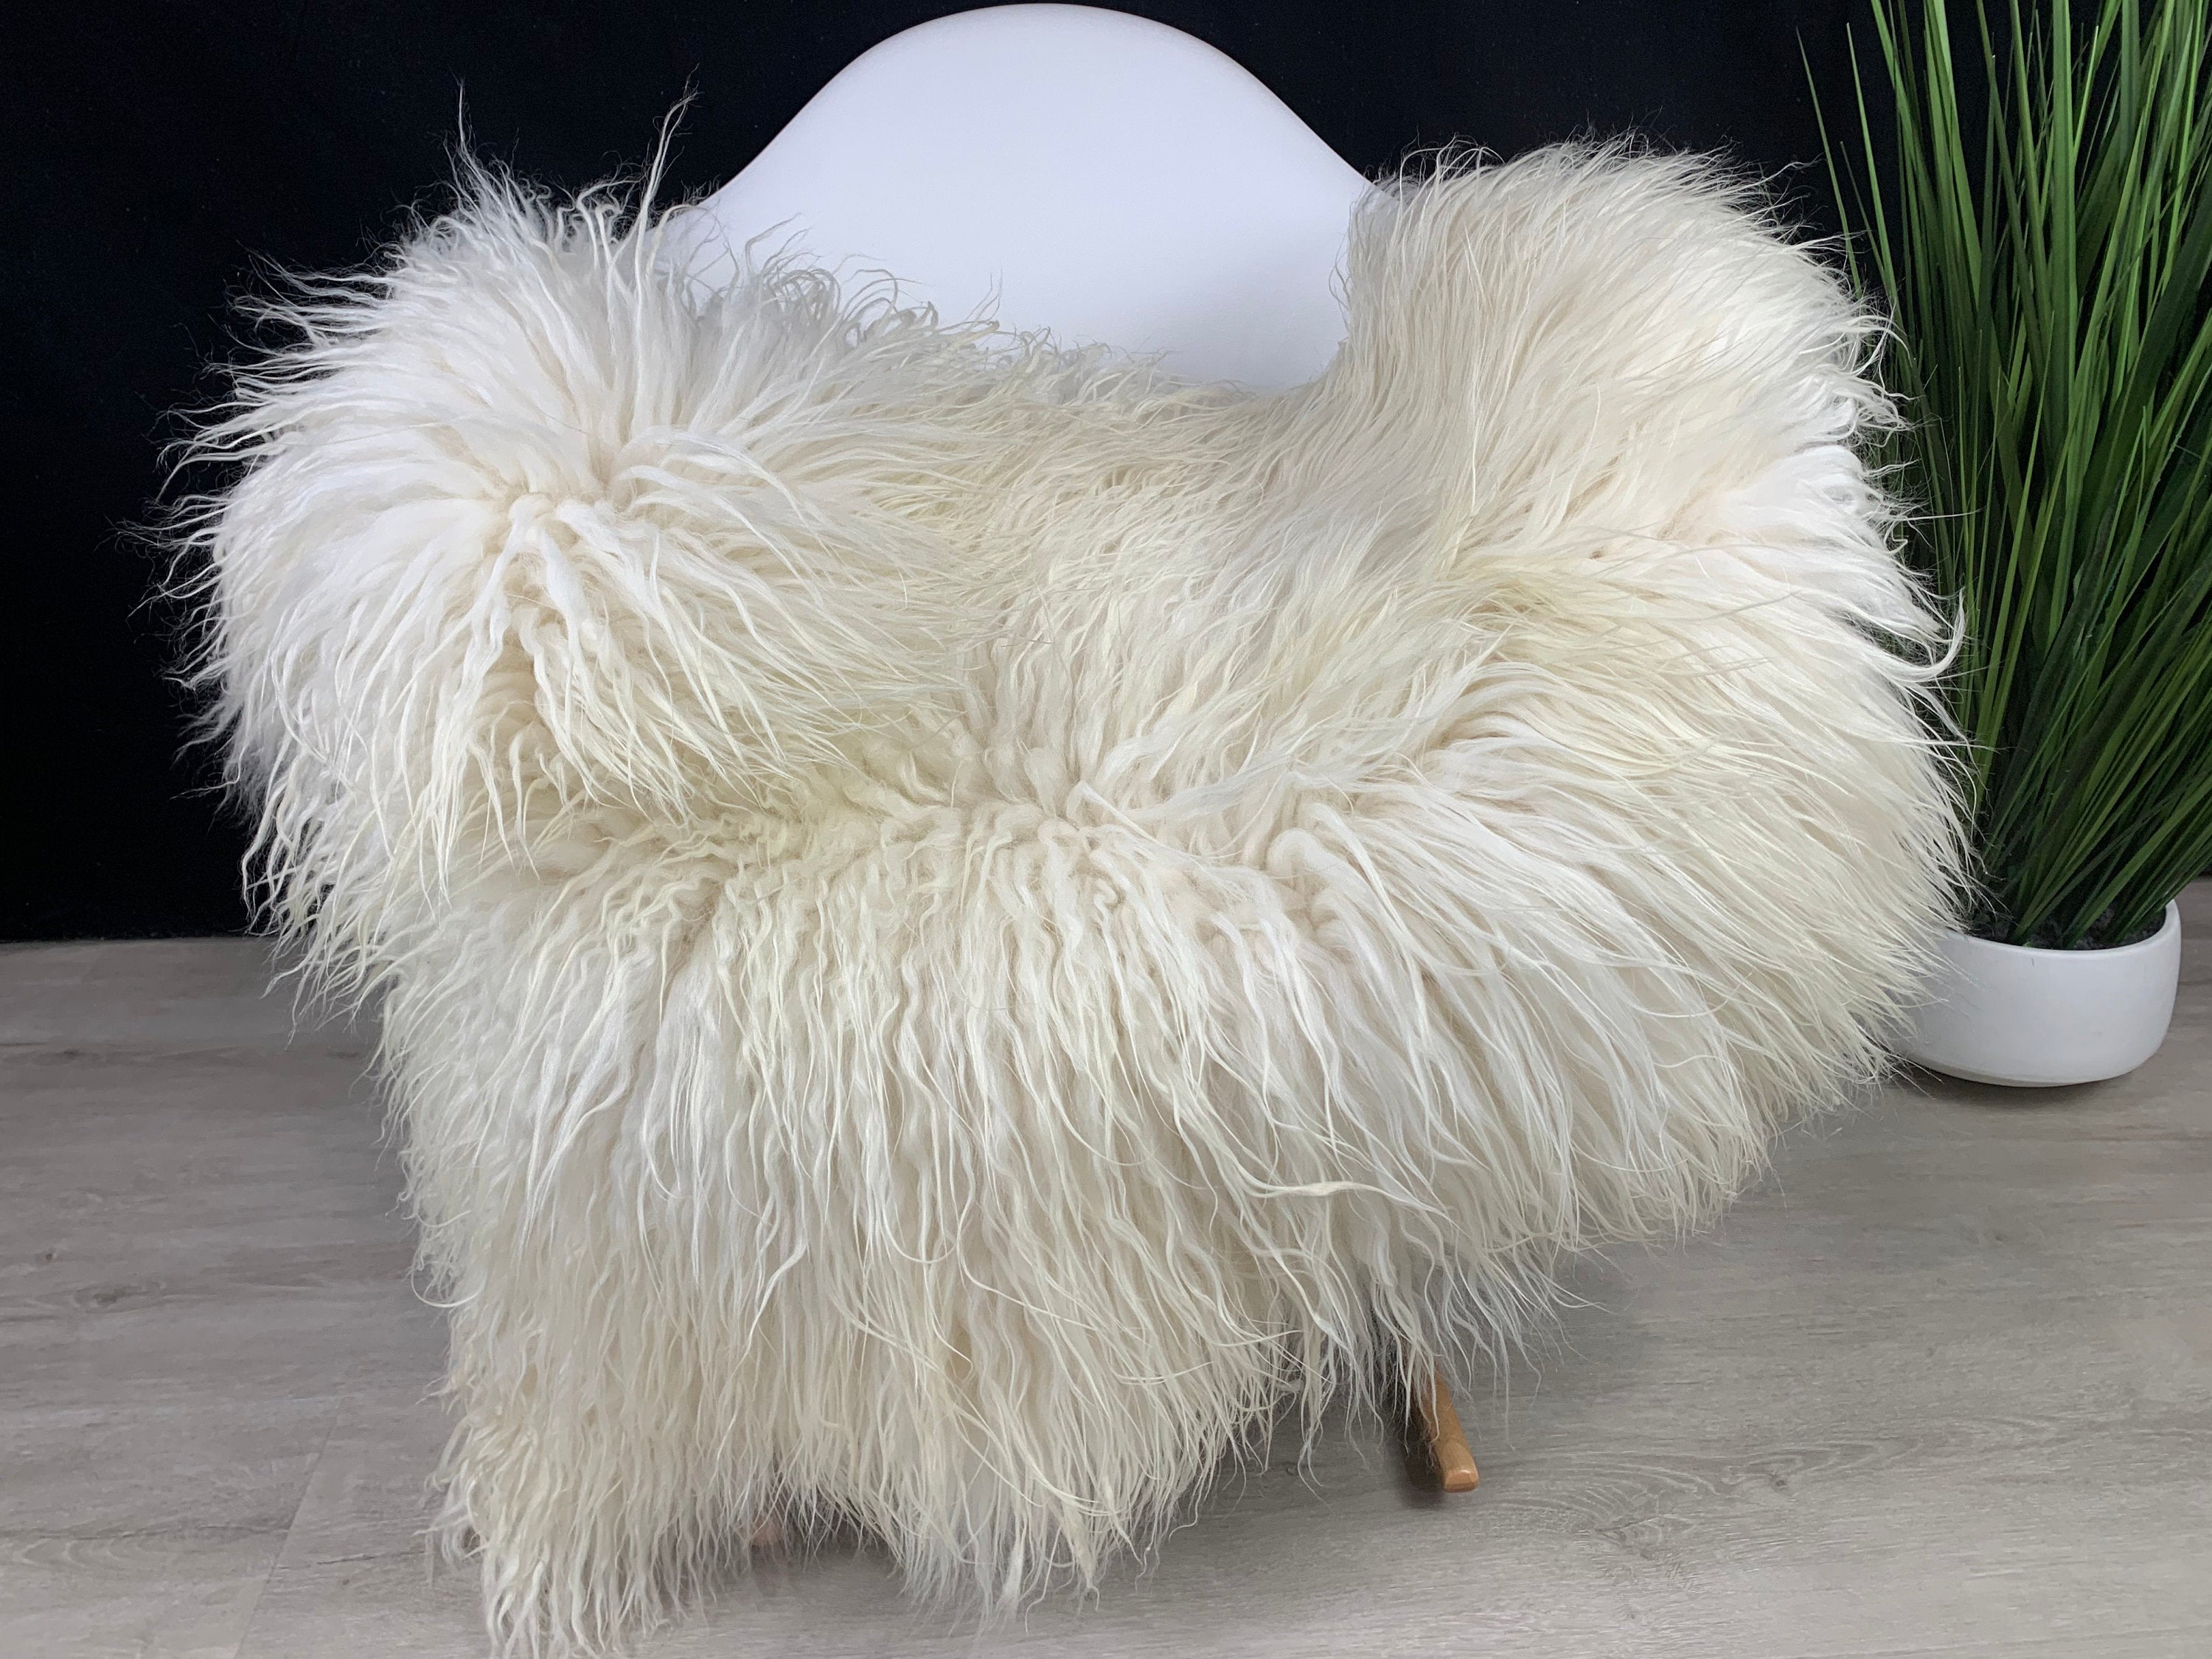 Curly White Iceland Sheepskin Rug * Genuine Sheepskin White Rug Fur Throw * Natural Animal Hide Pelt * Sheepskin Seat Cover